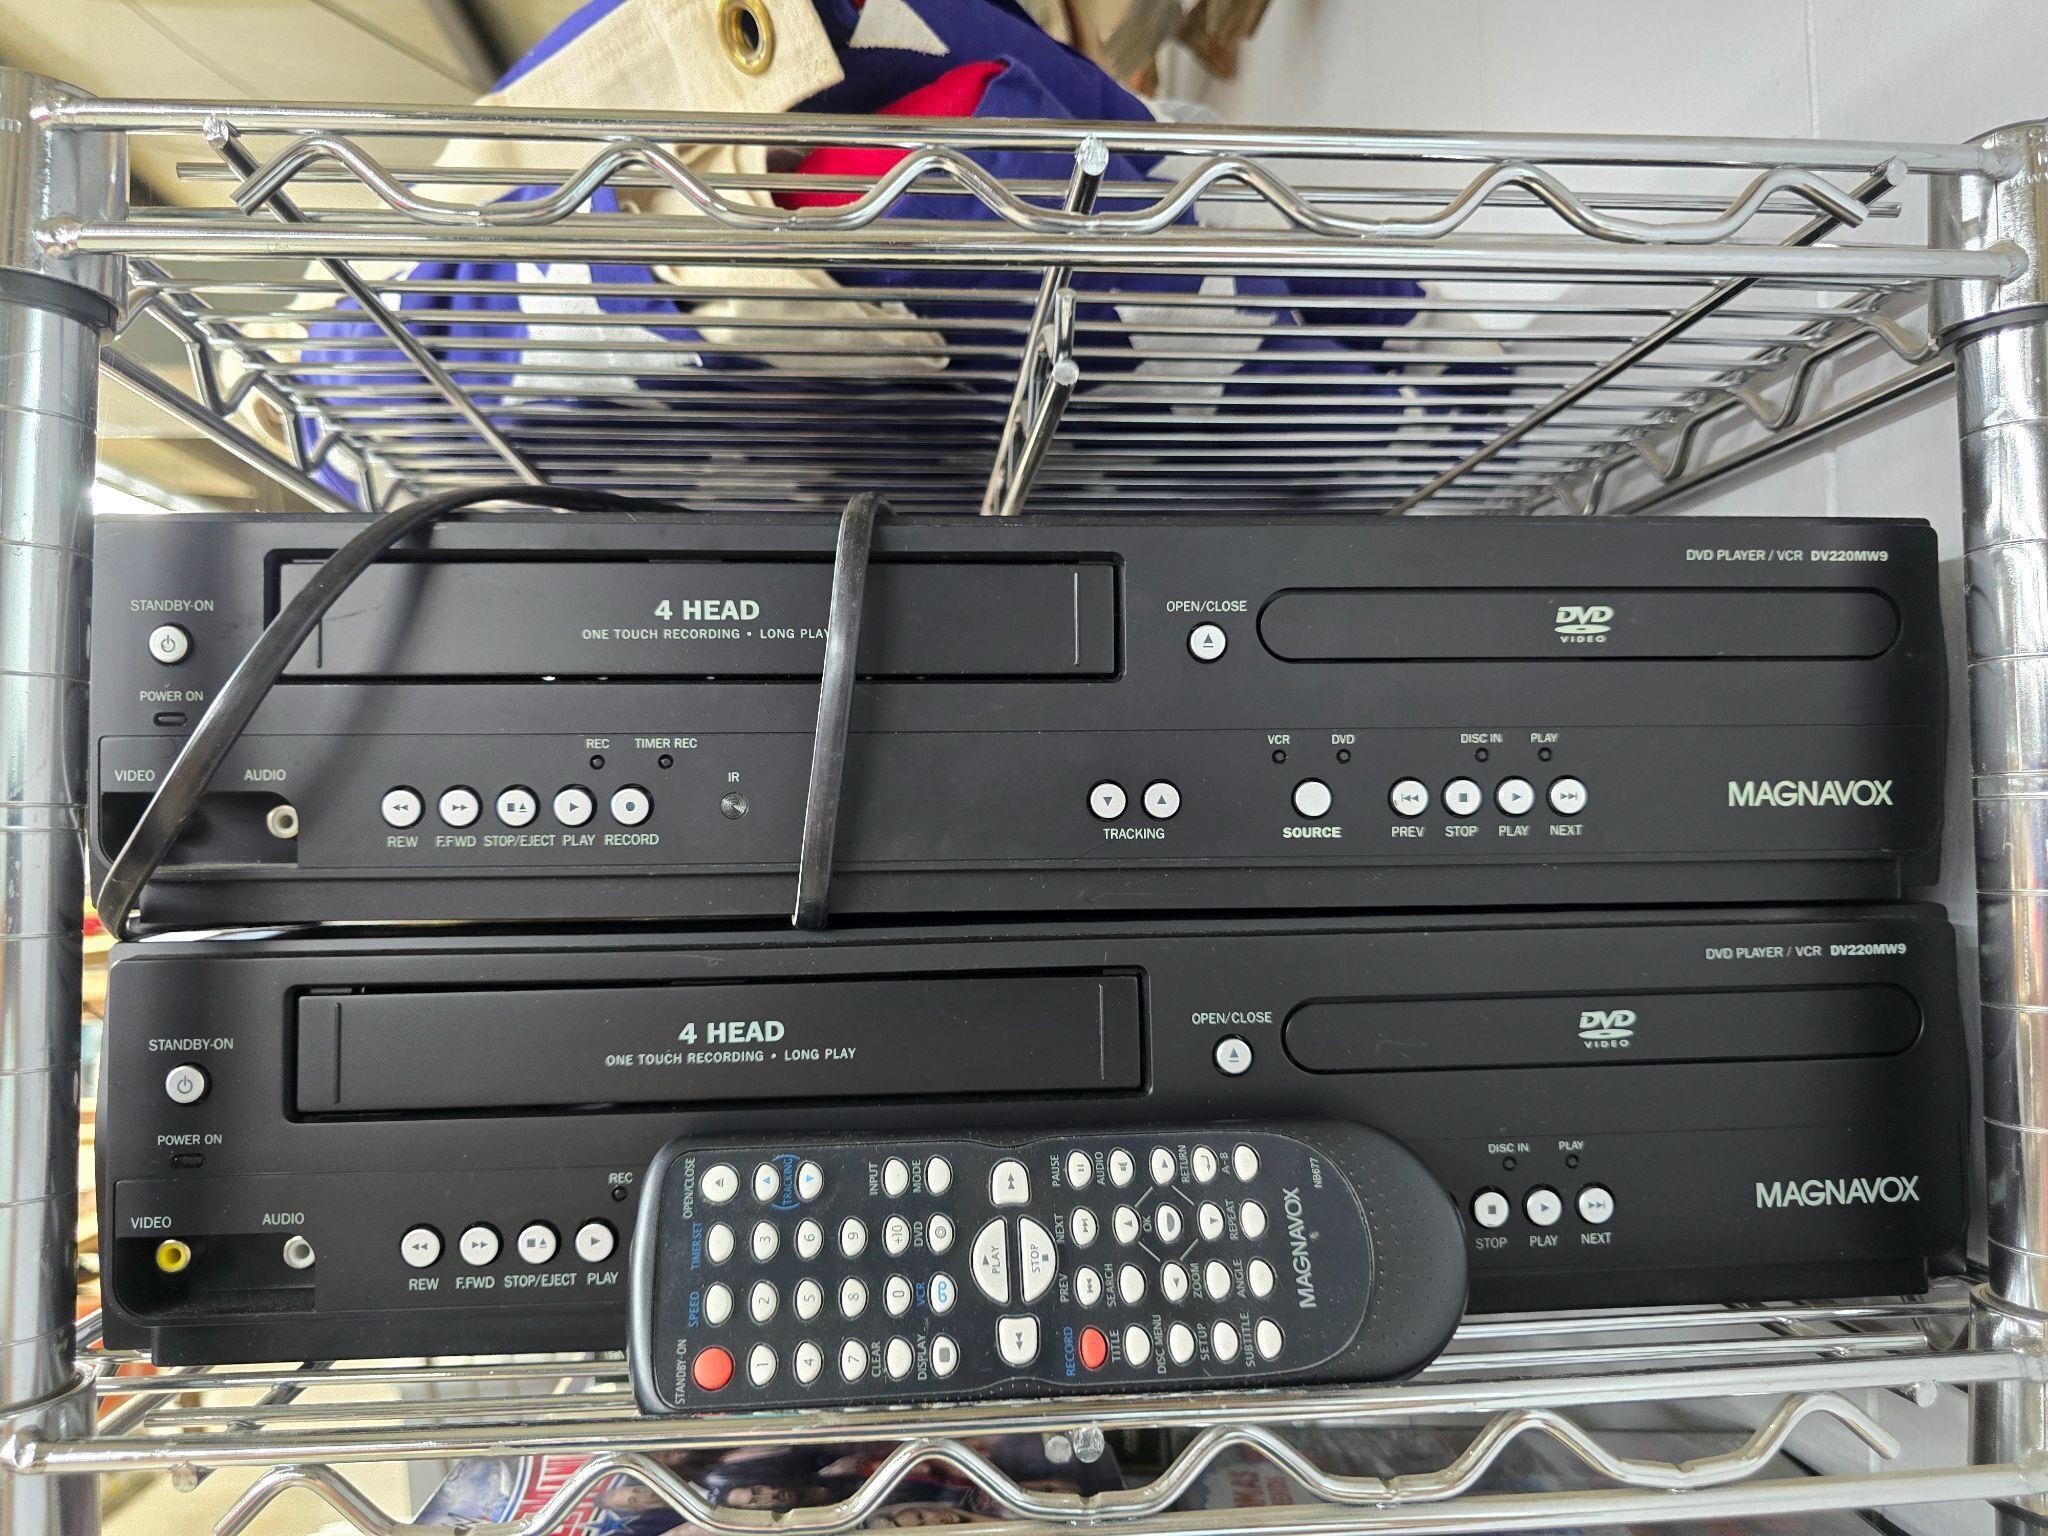 2 VHS/DVD players